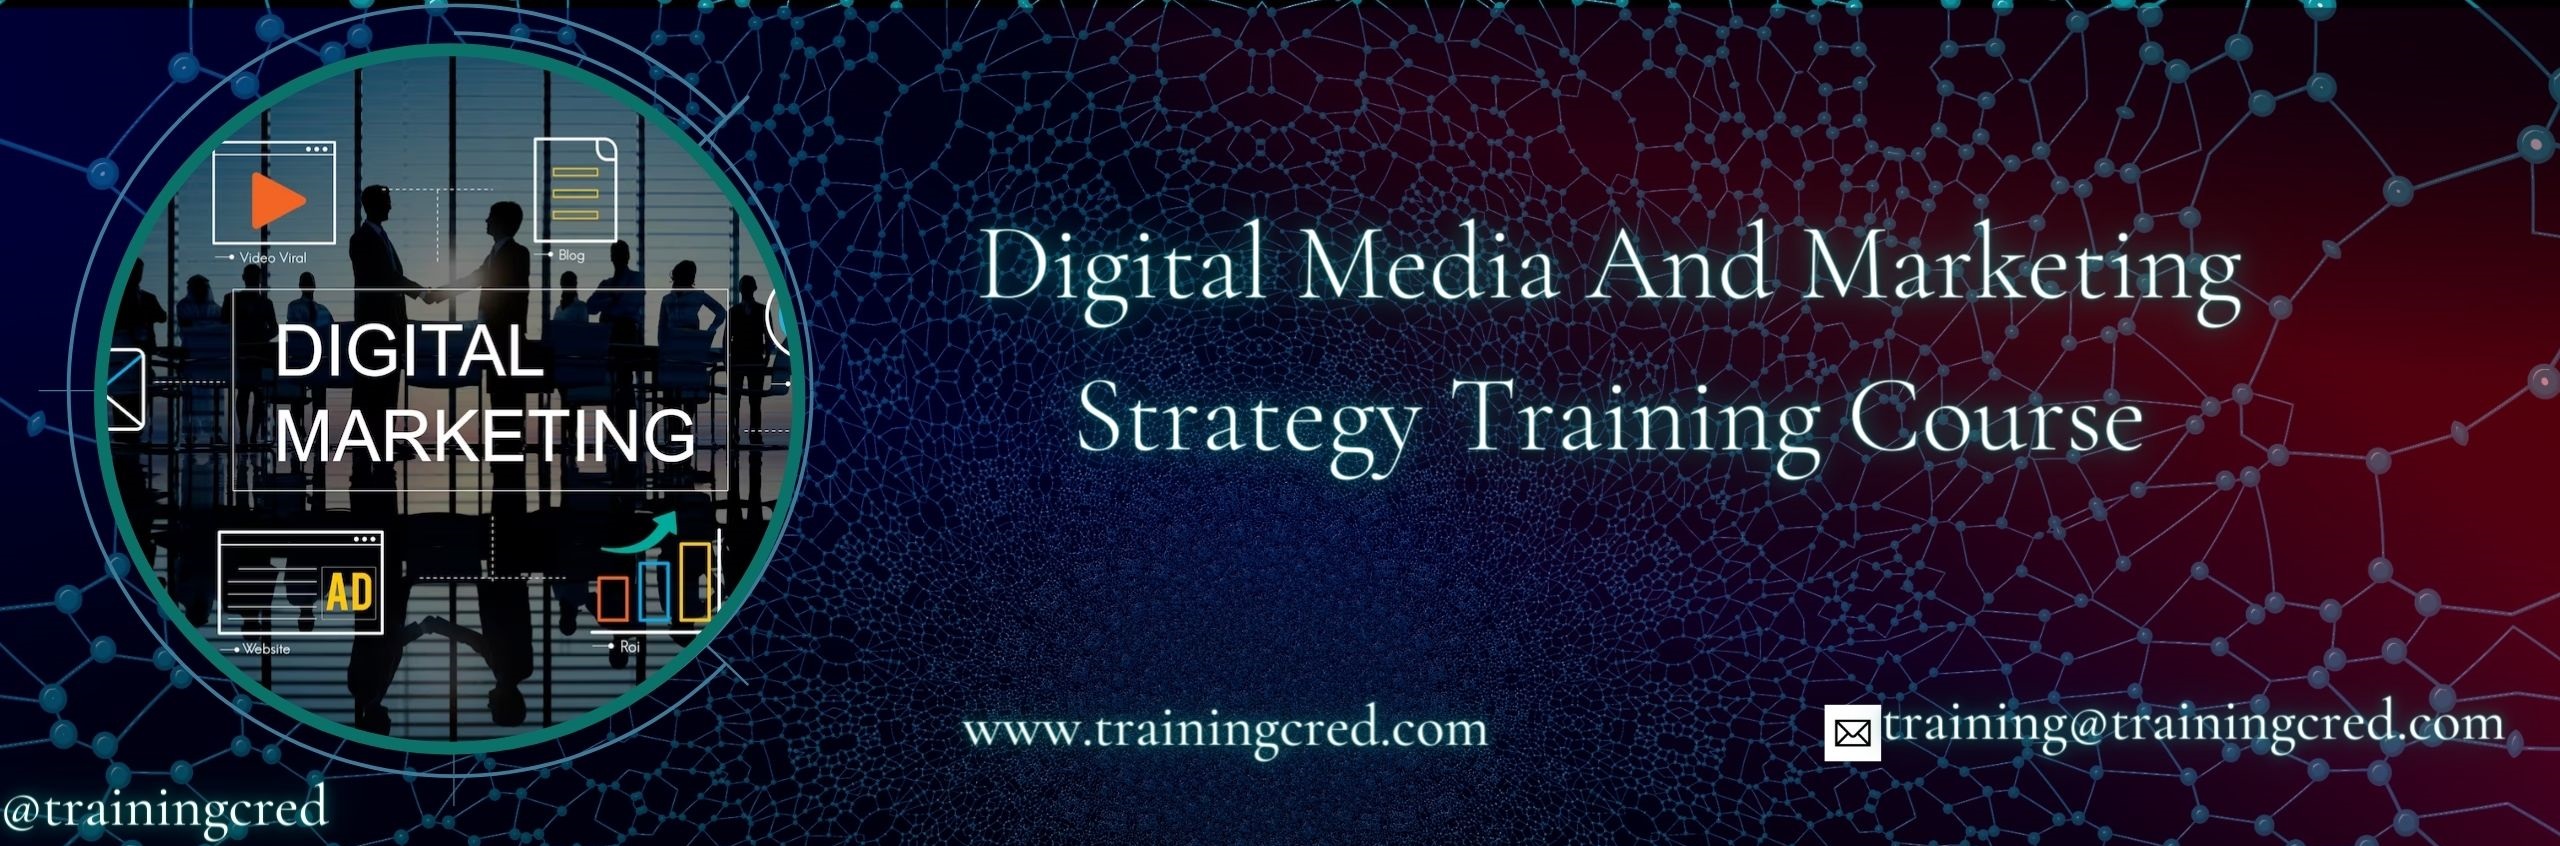 Digital Media And Marketing Strategy Training